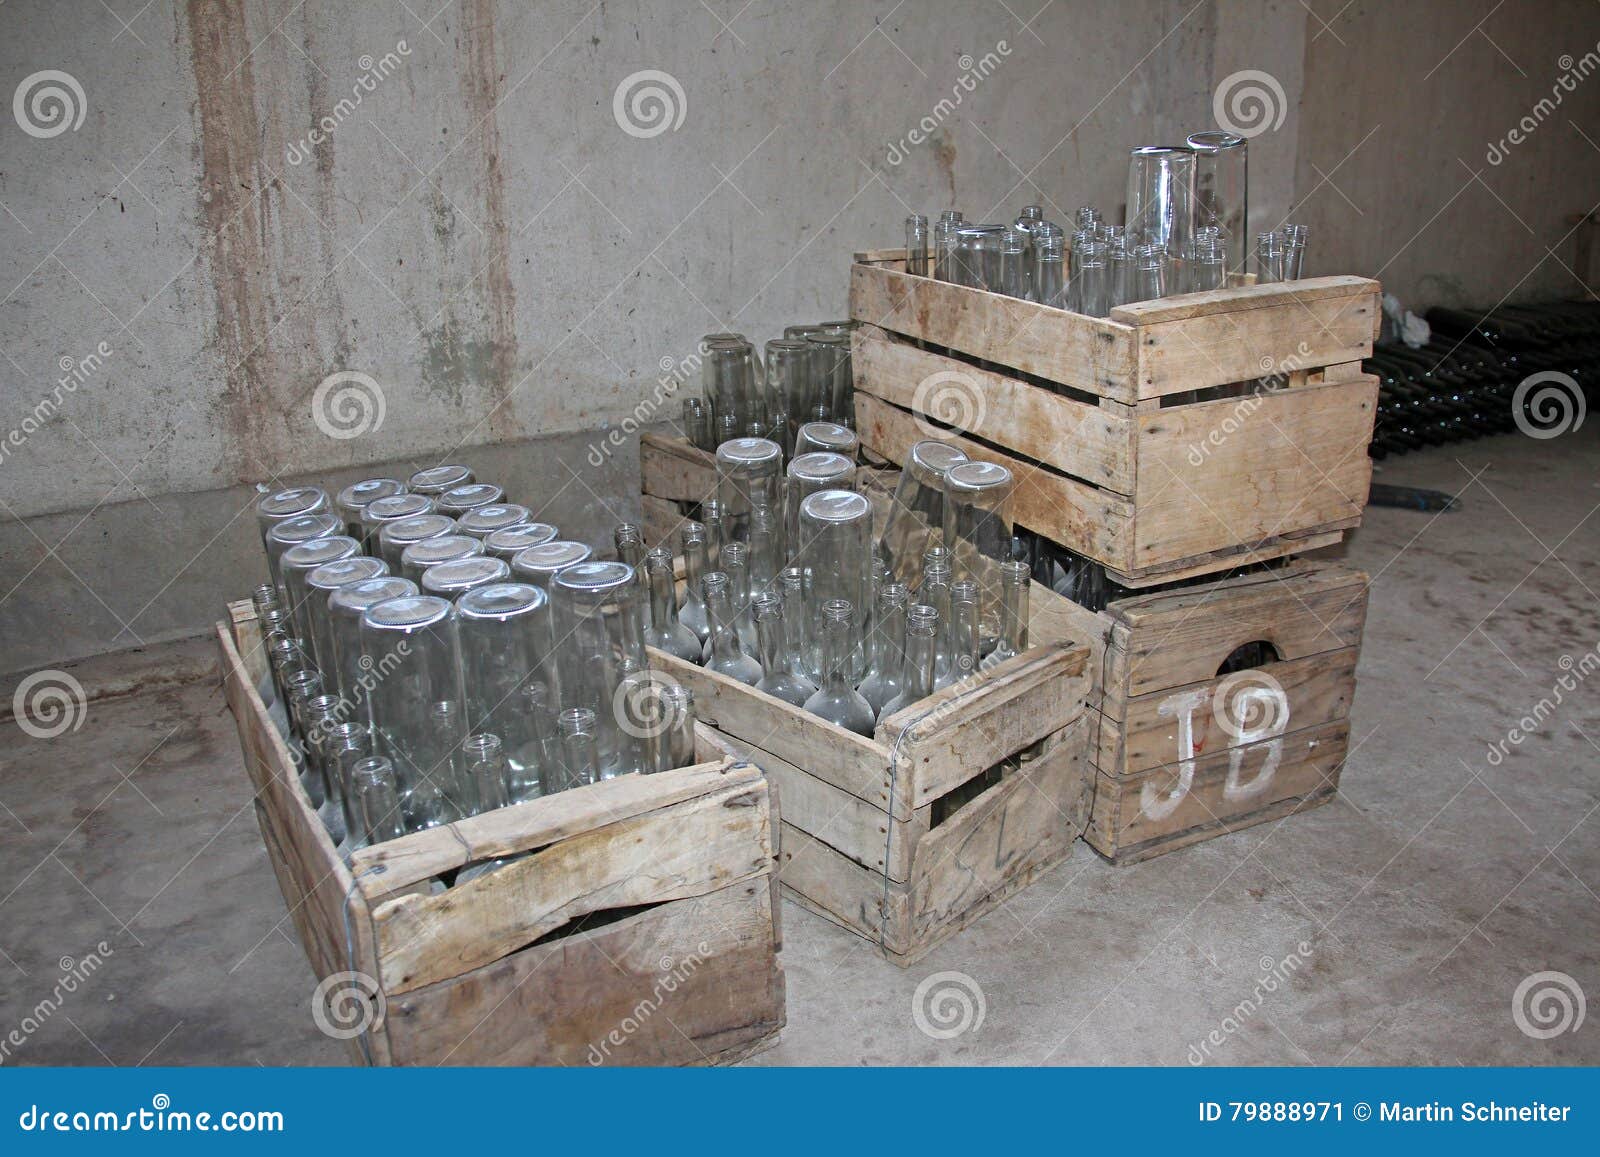 empty bottles in wooden boxes